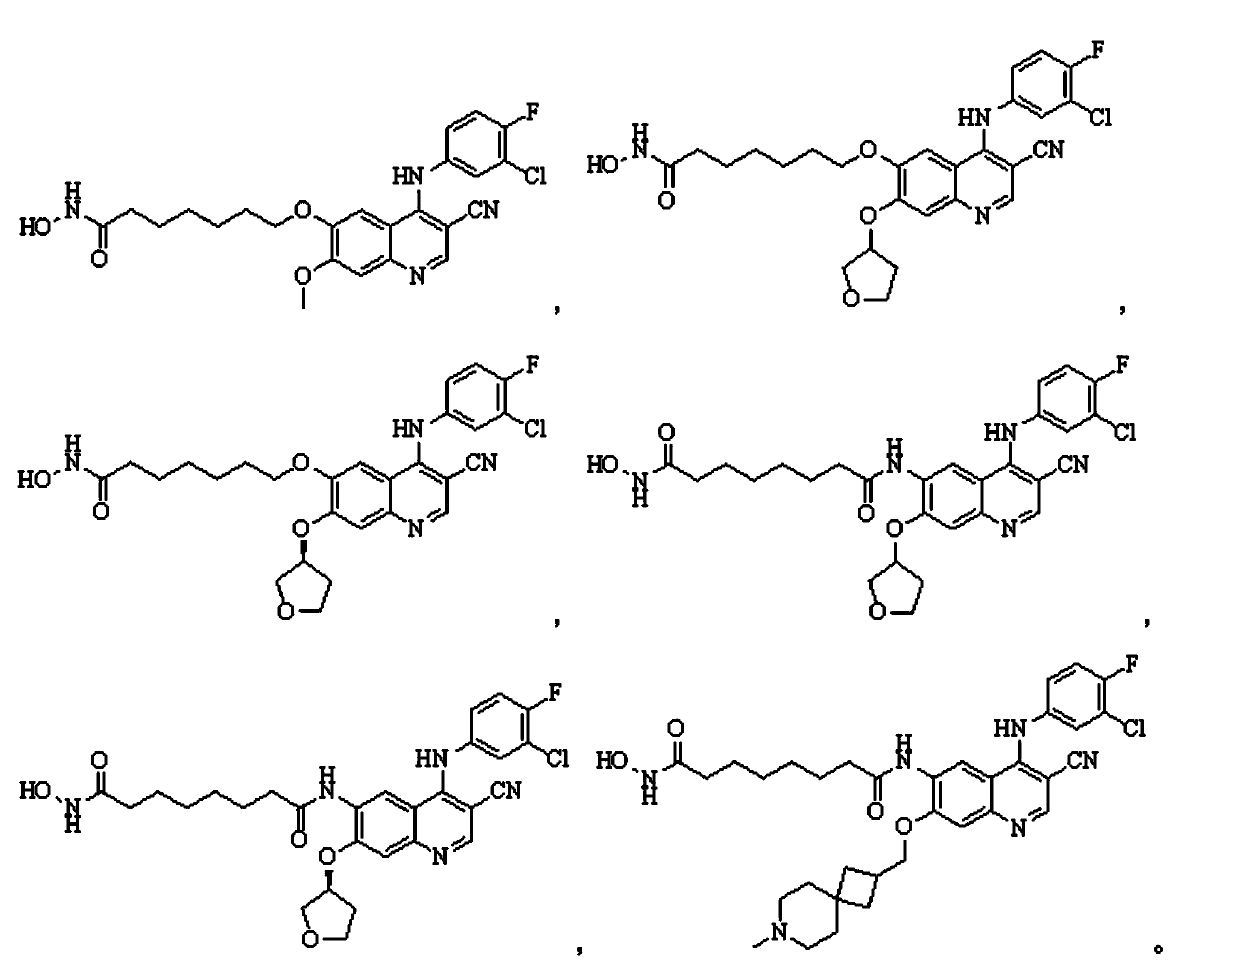 Quinolyl EGFR tyrosine kinase inhibitor containing zinc binding group